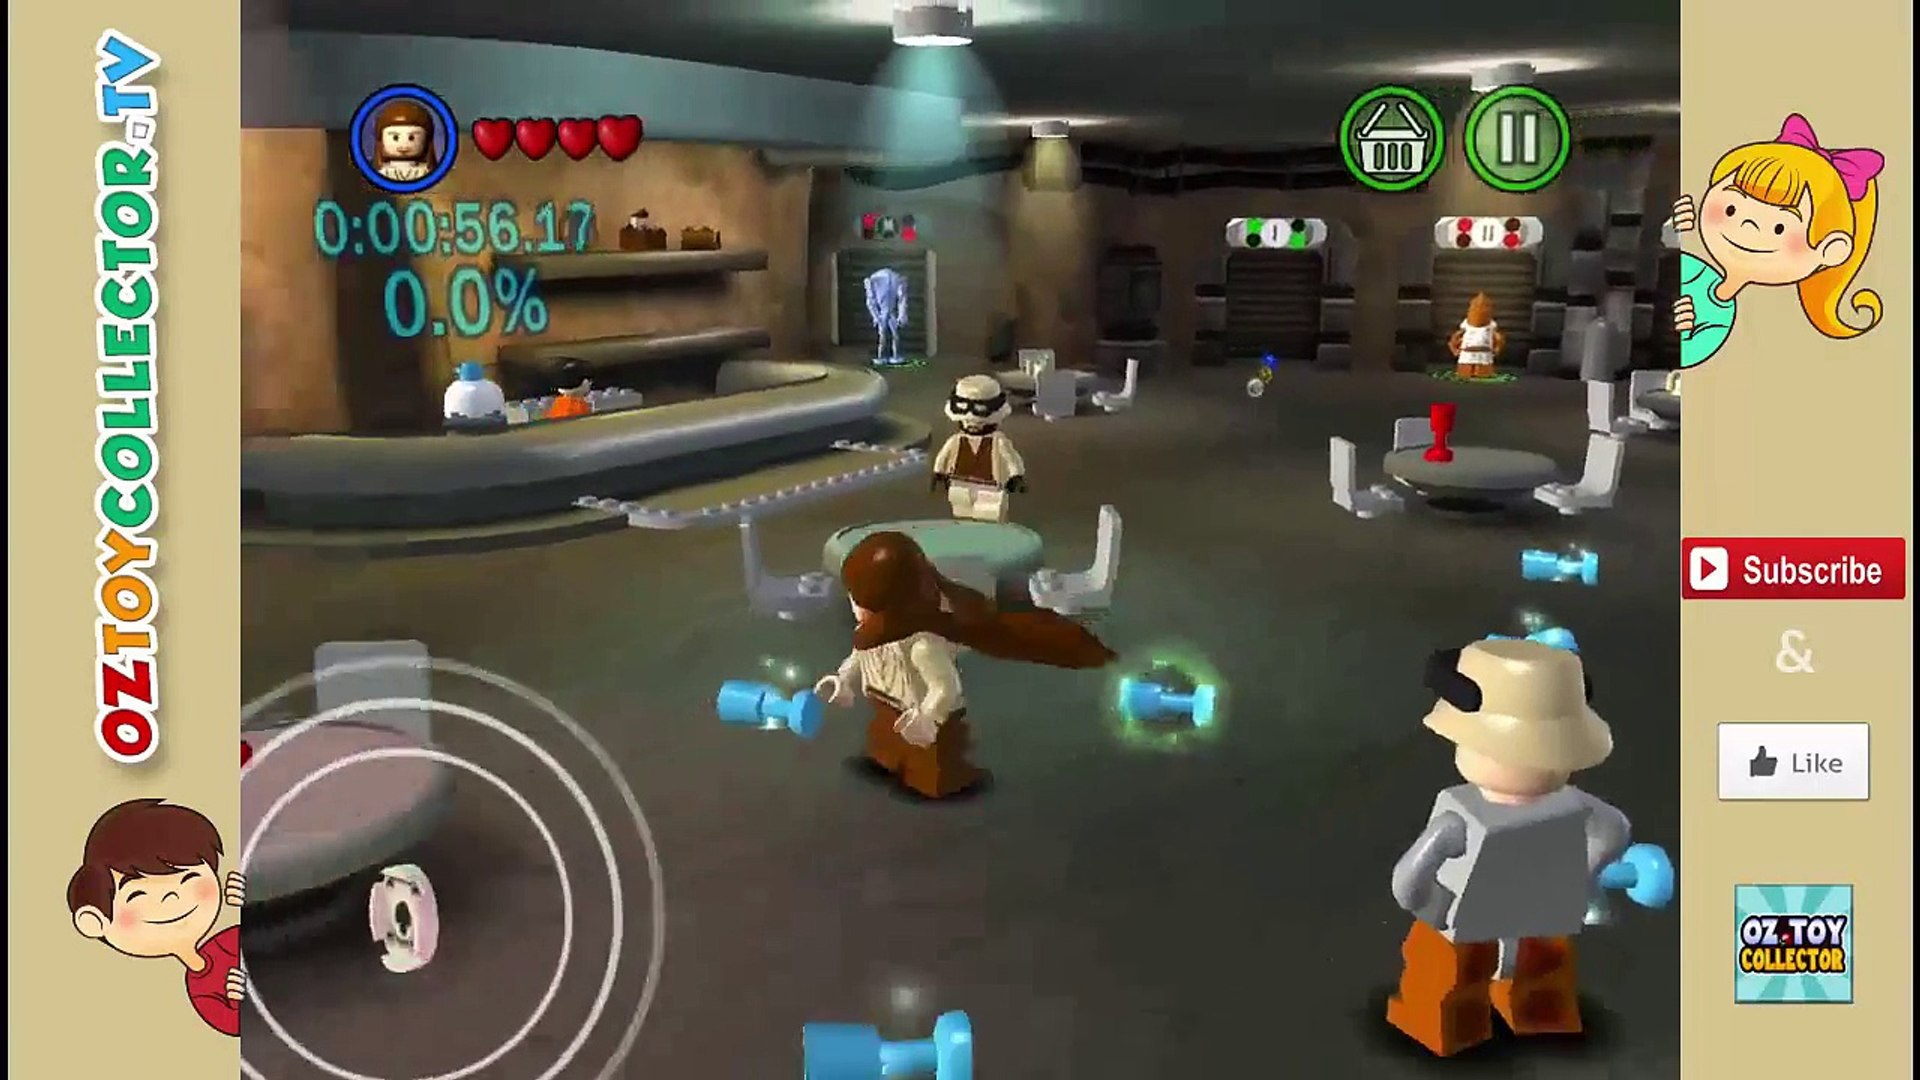 Lego Star Wars The Complete Saga ipad Game walkthrough -